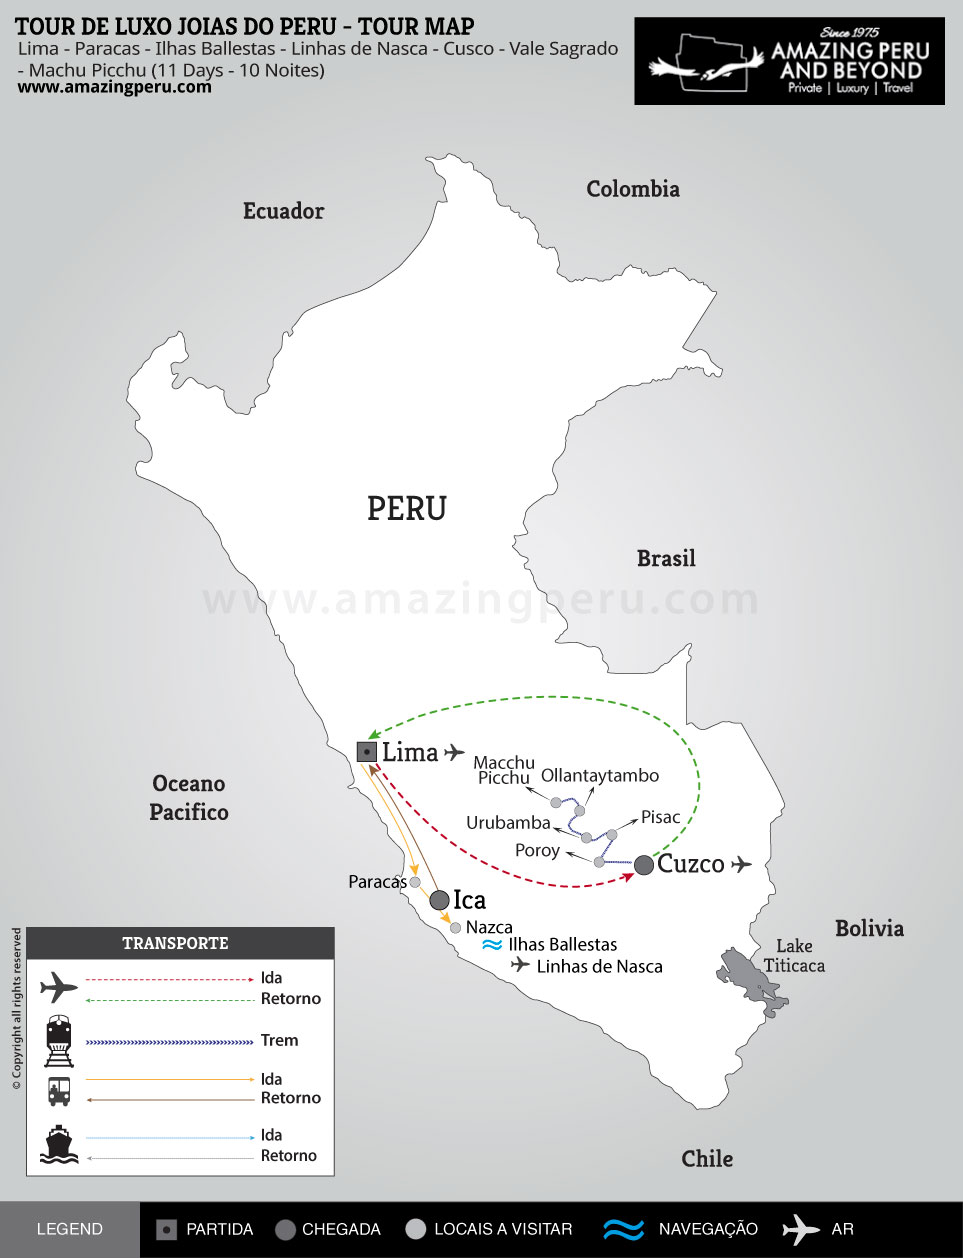 Tour de Luxo Joias do Peru - 11 days / 10 nights.